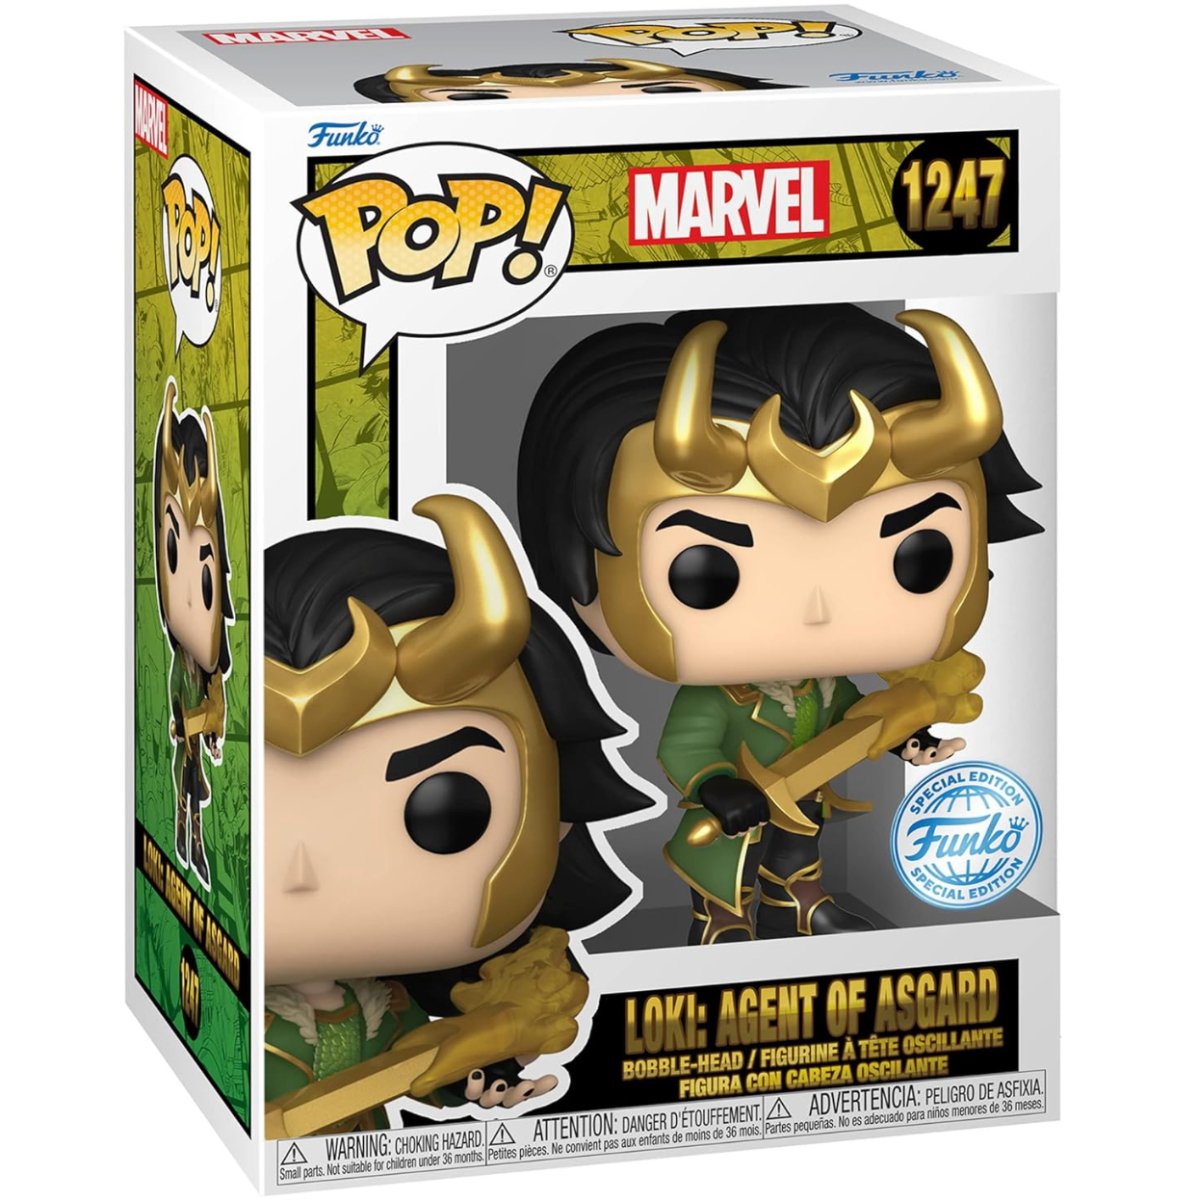 Marvel - Loki: Agent of Asgard (Special Edition) #1247 - Funko Pop! Vinyl Marvel - Persona Toys